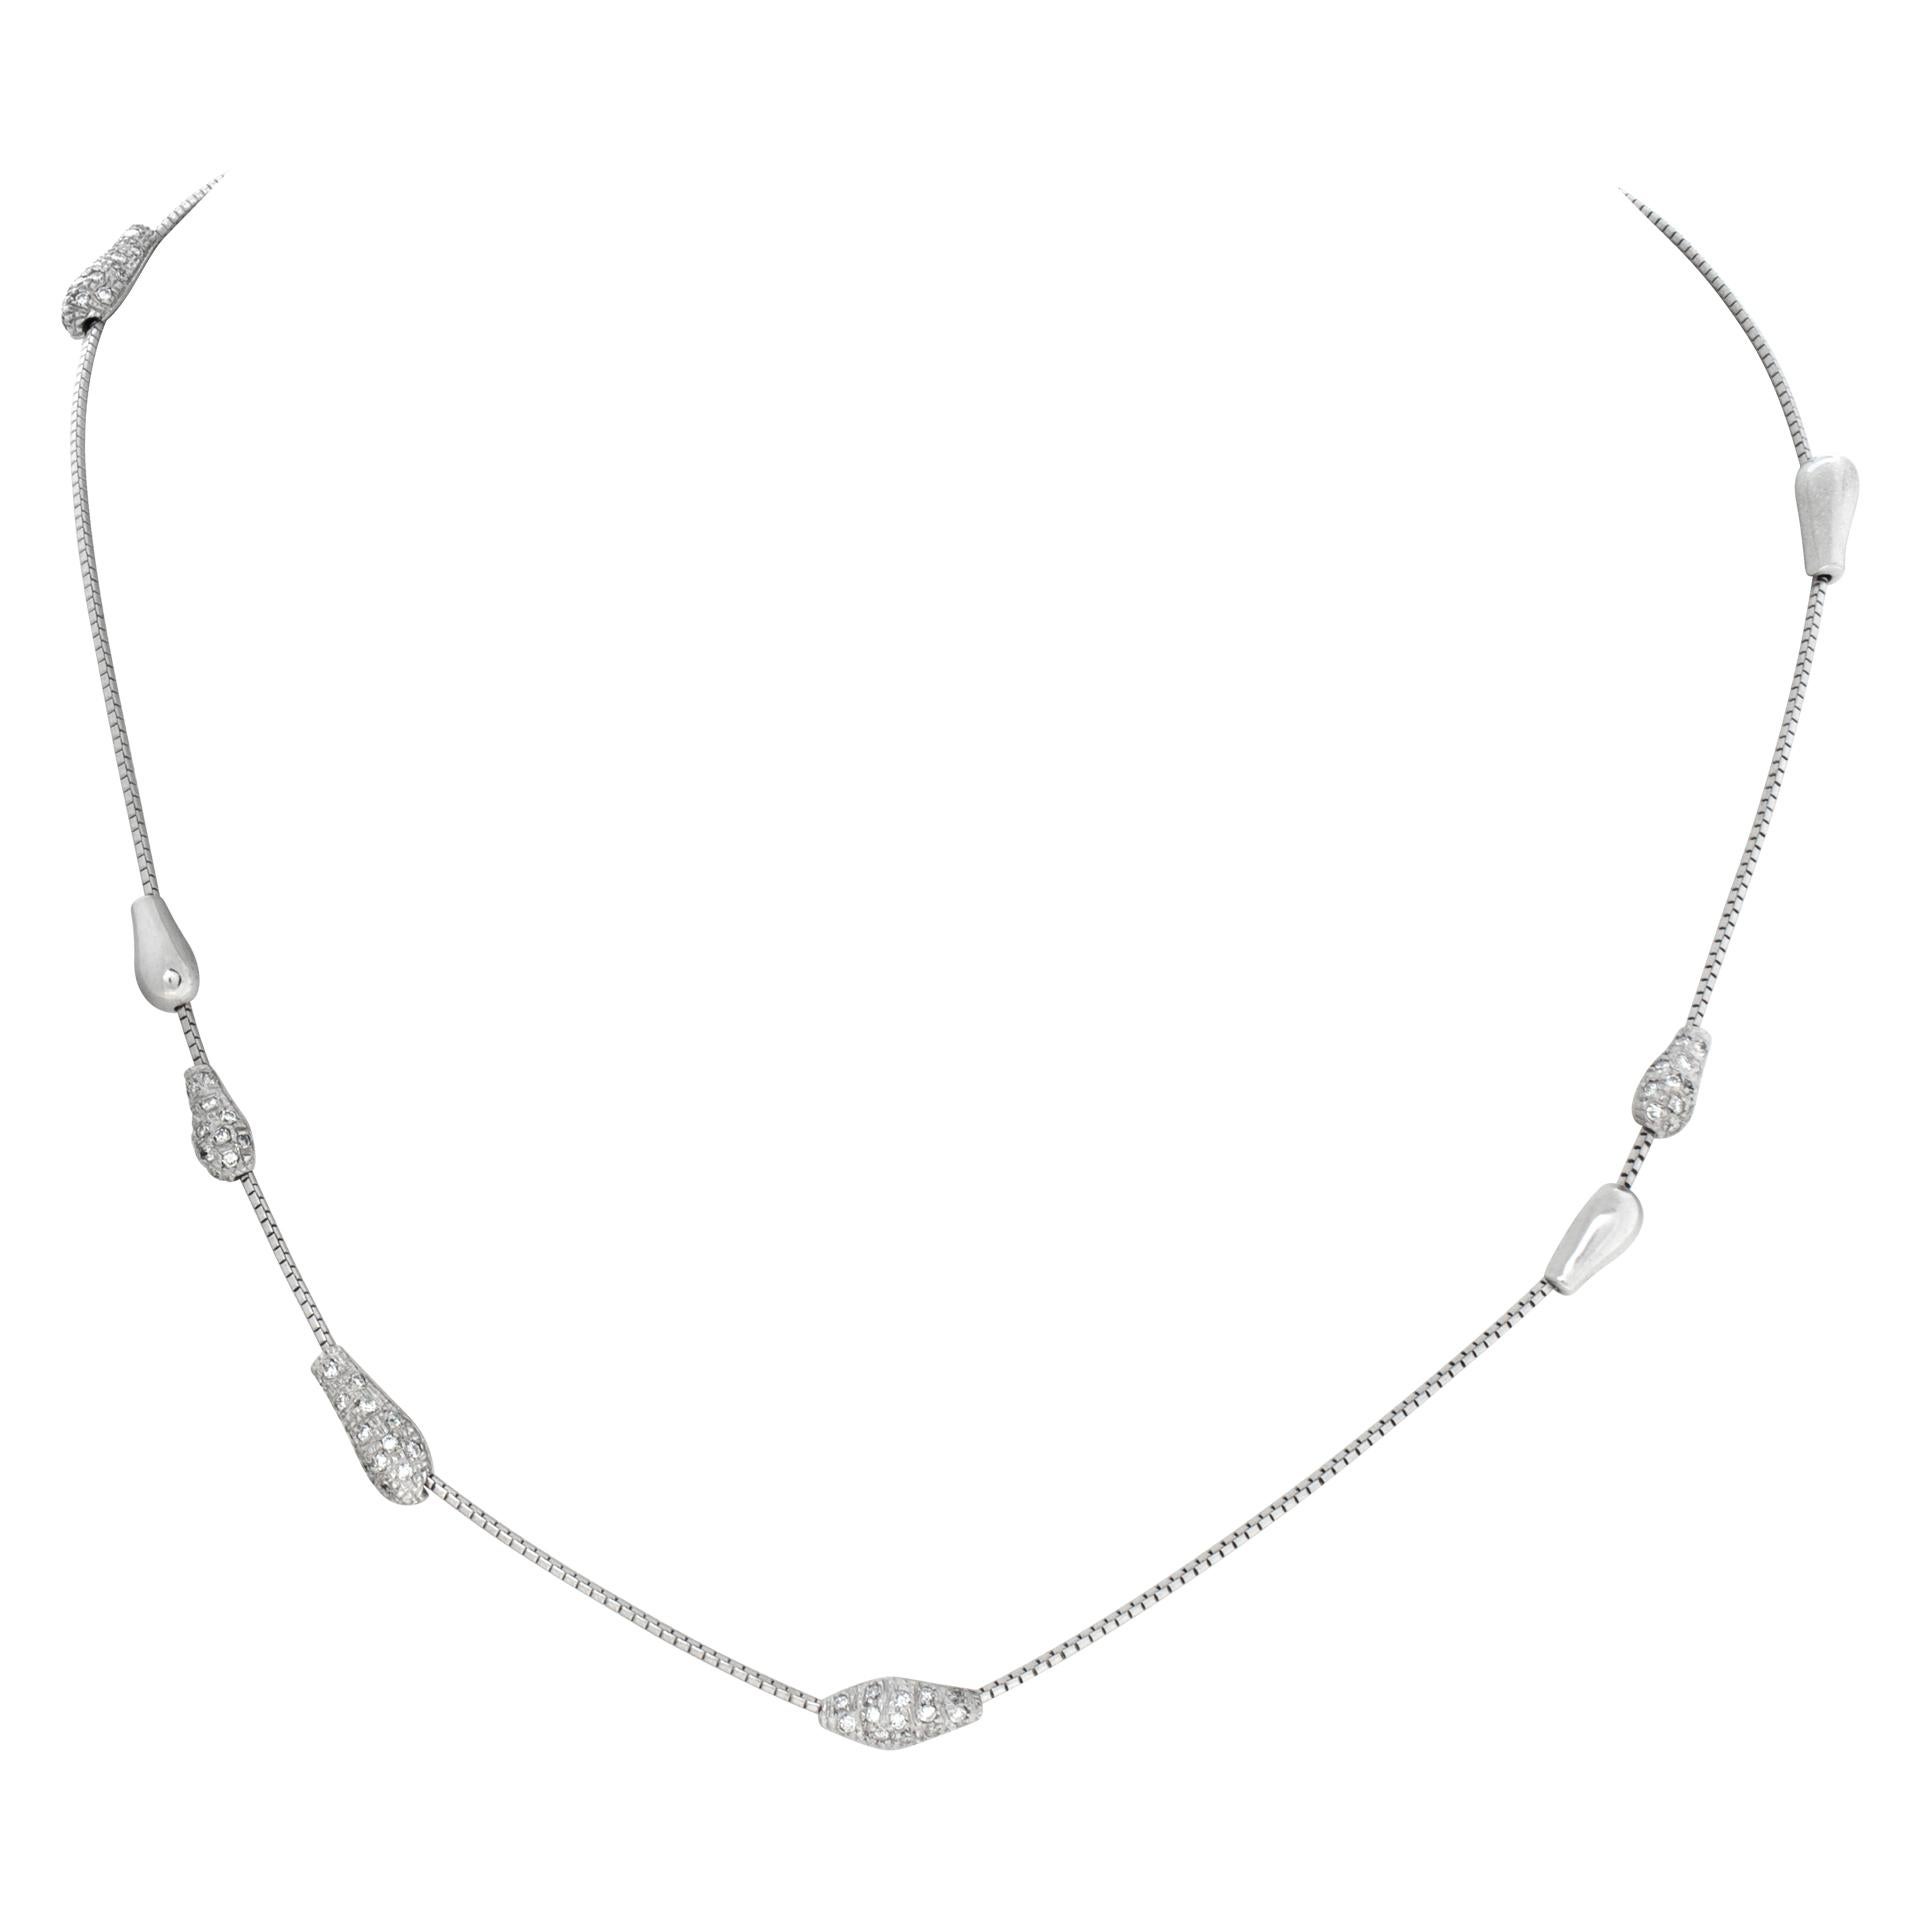 Designer Signed Henry Stern 18k White Gold Diamonds Necklace